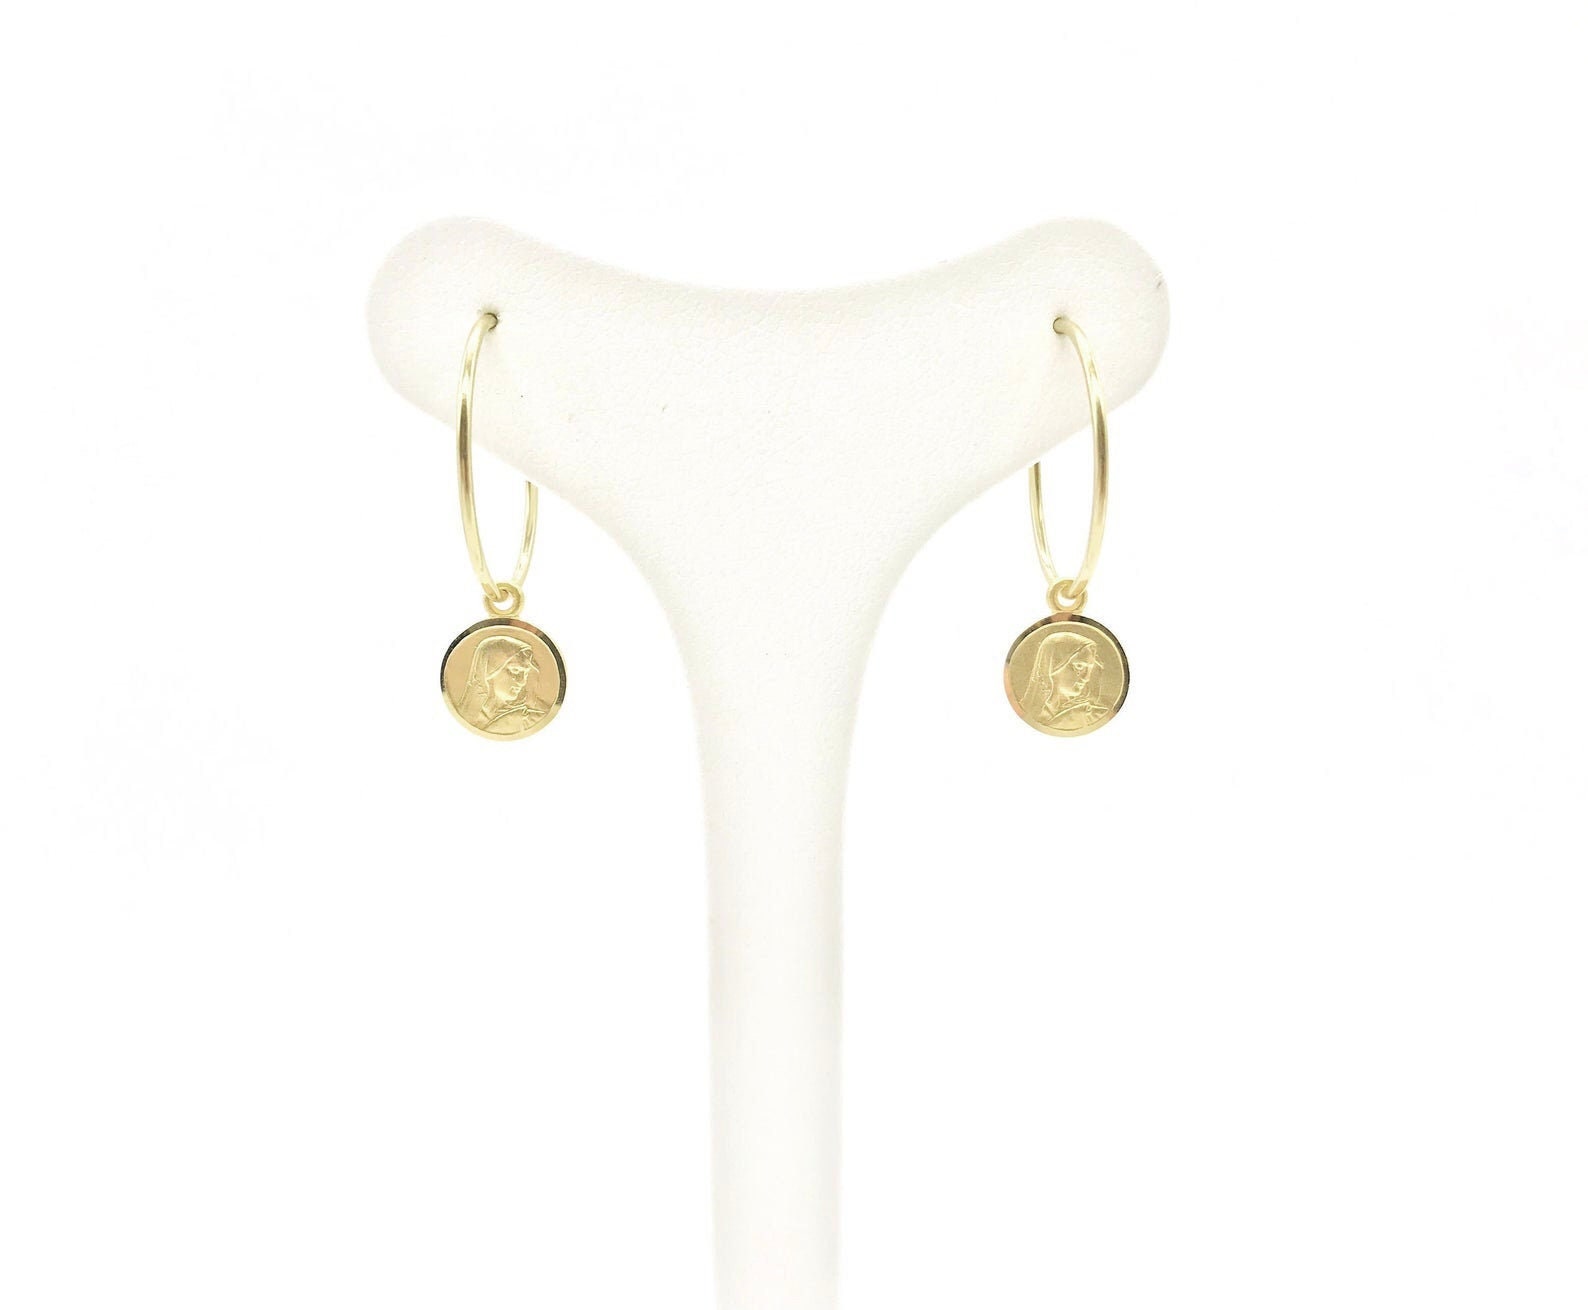 18K Gold Mother Mary Hoop Earrings For Women - Drop Disc Hoops Religious Jewelry Charm Italian